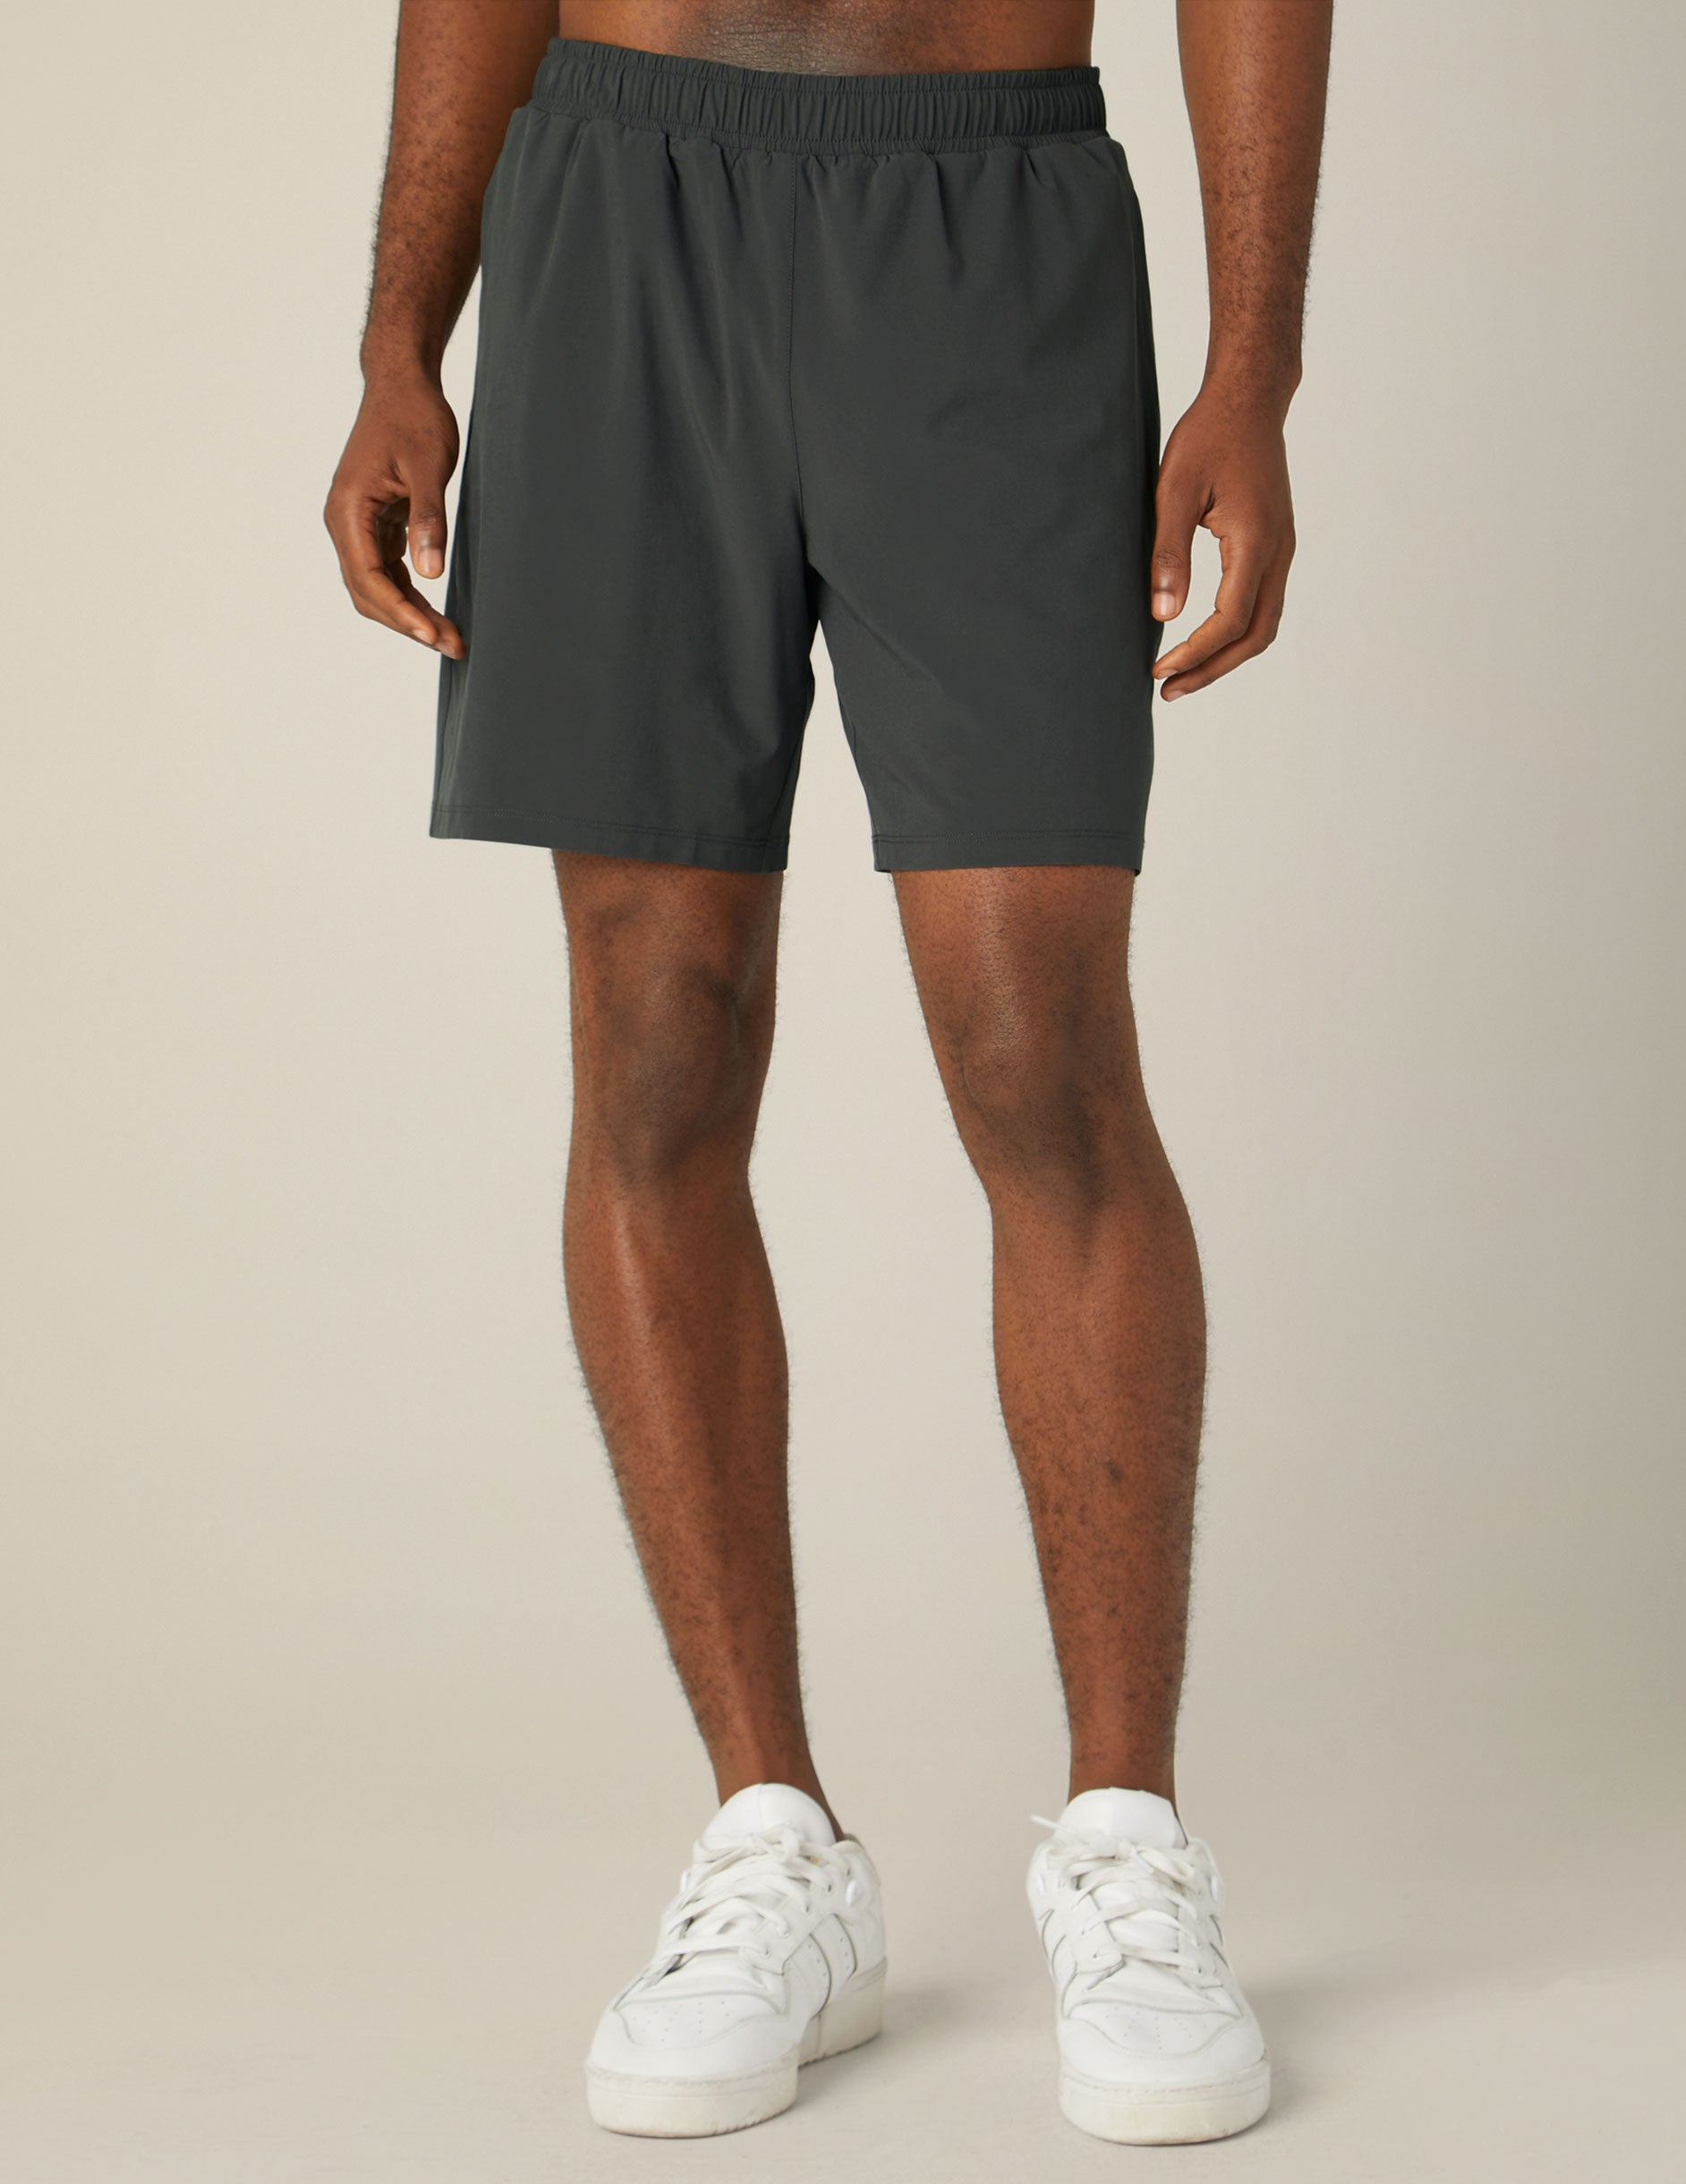 dark gray mens shorts